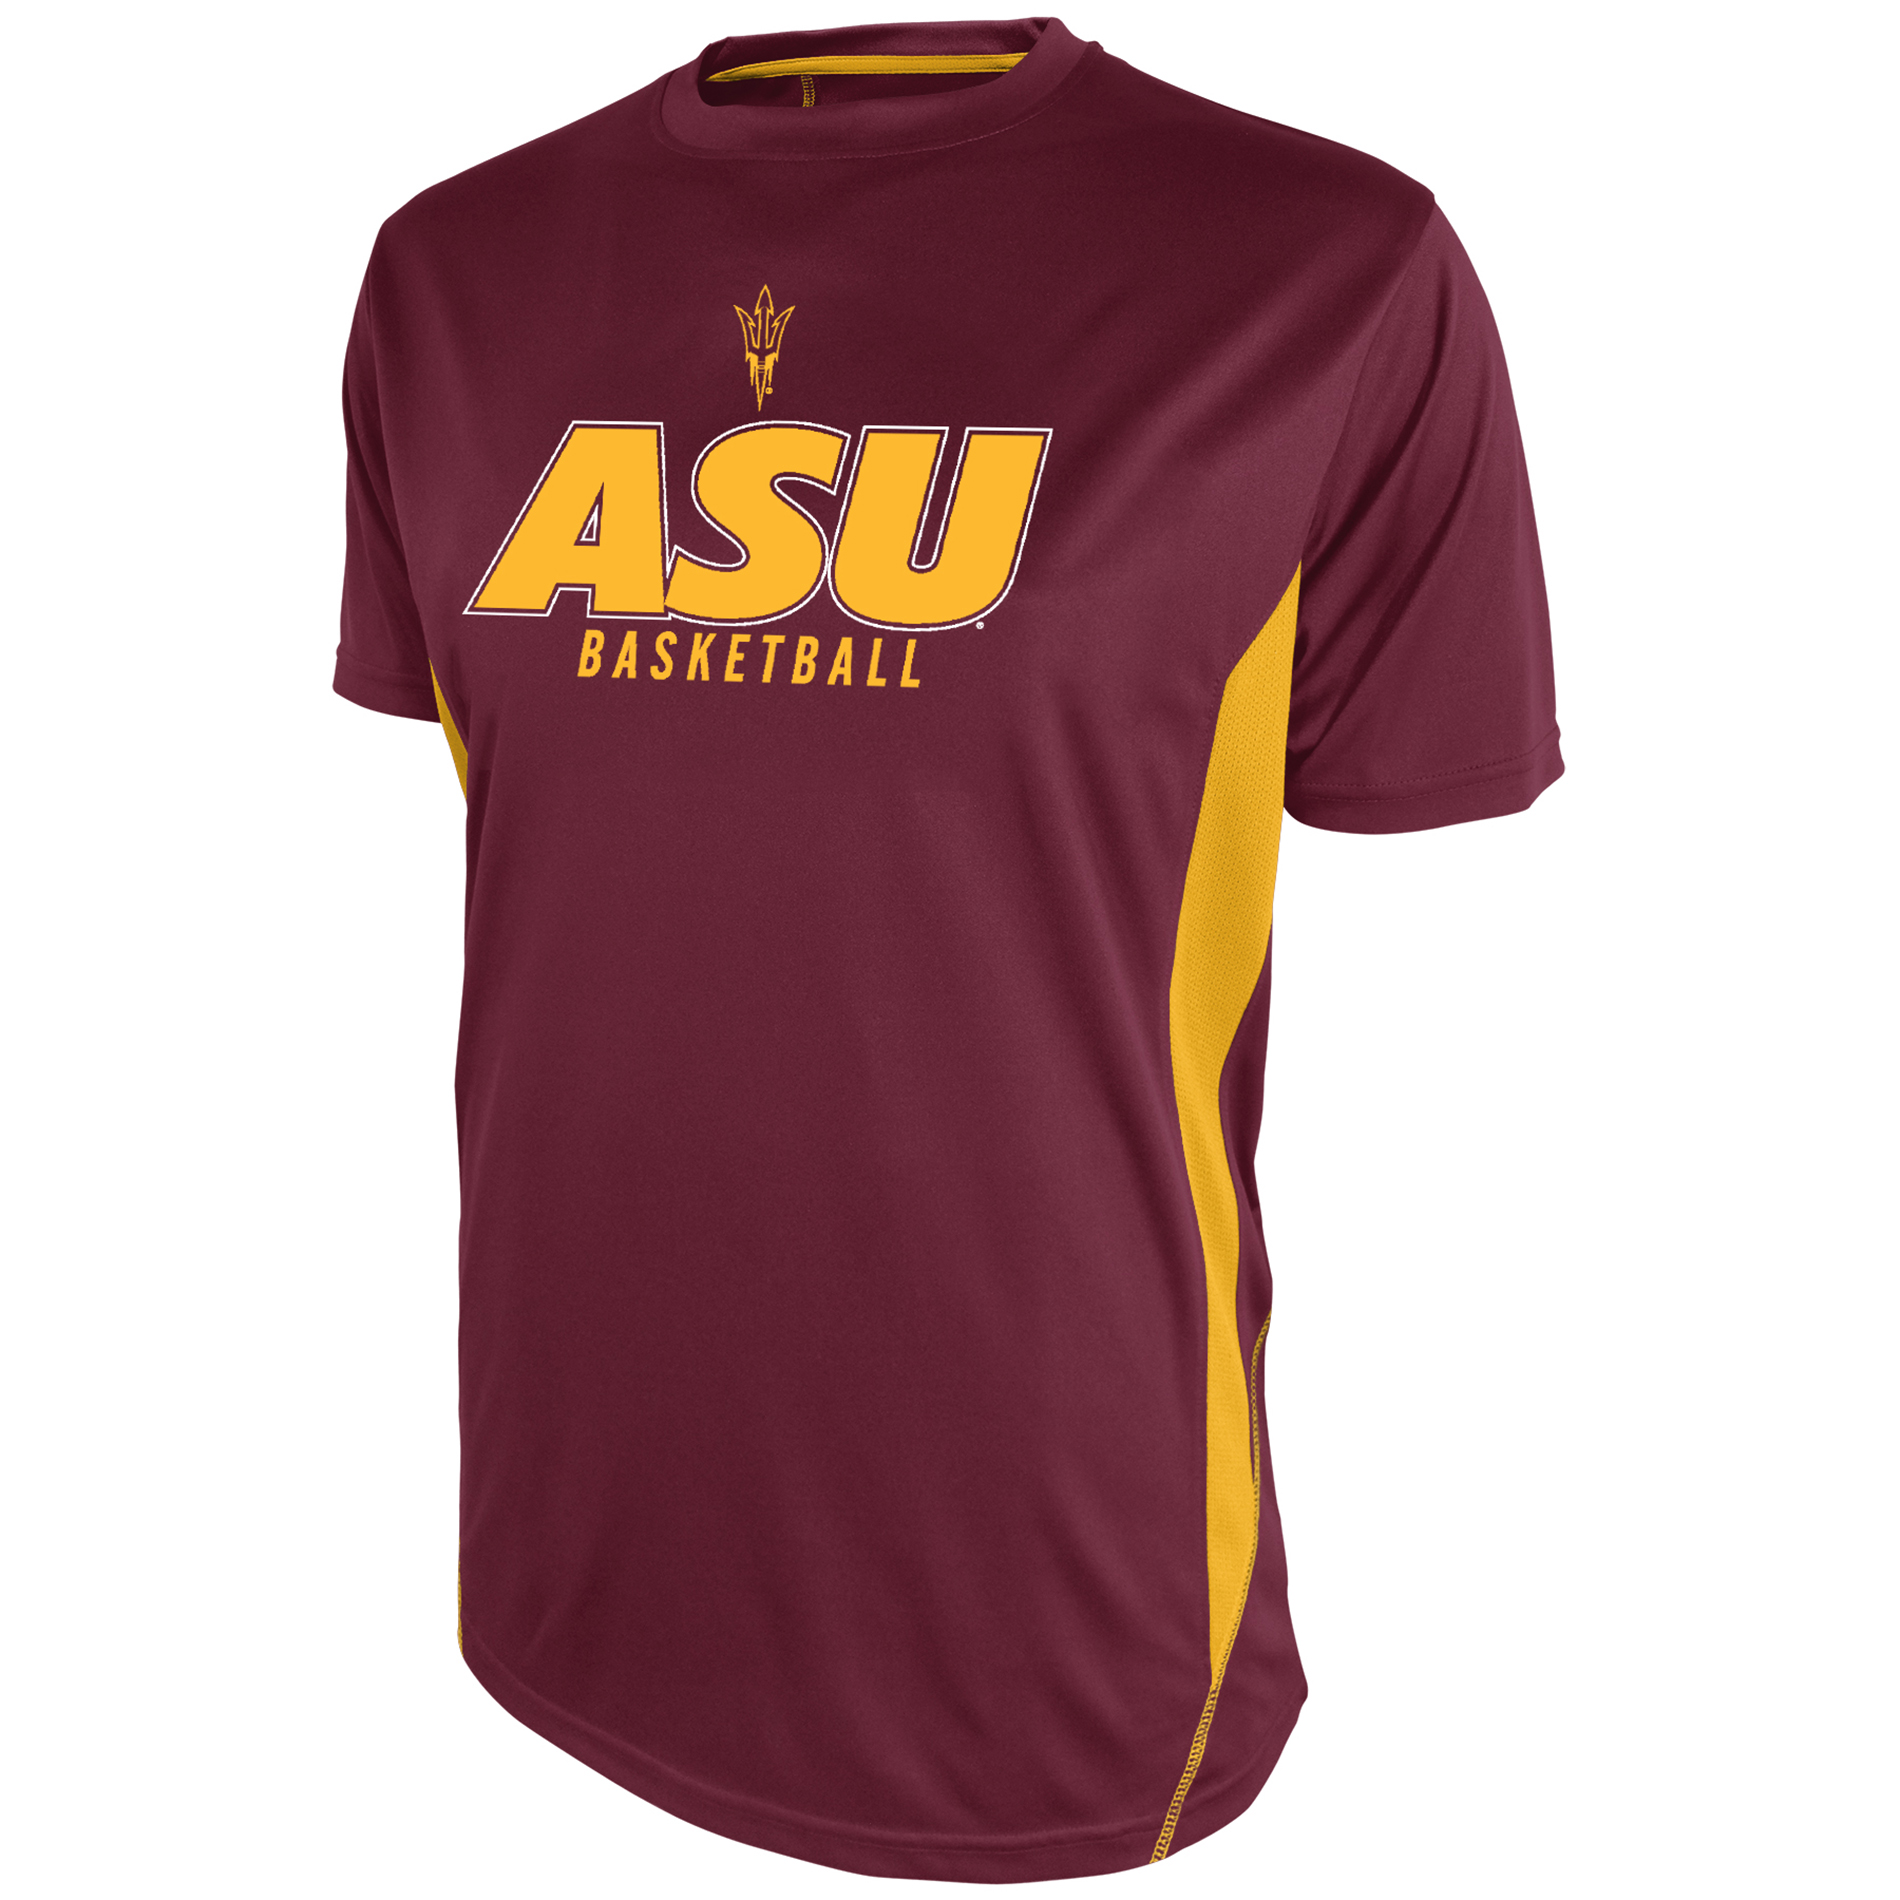 NCAA Mens' Arizona State Sun Devils Short Sleeve Athletic Tee